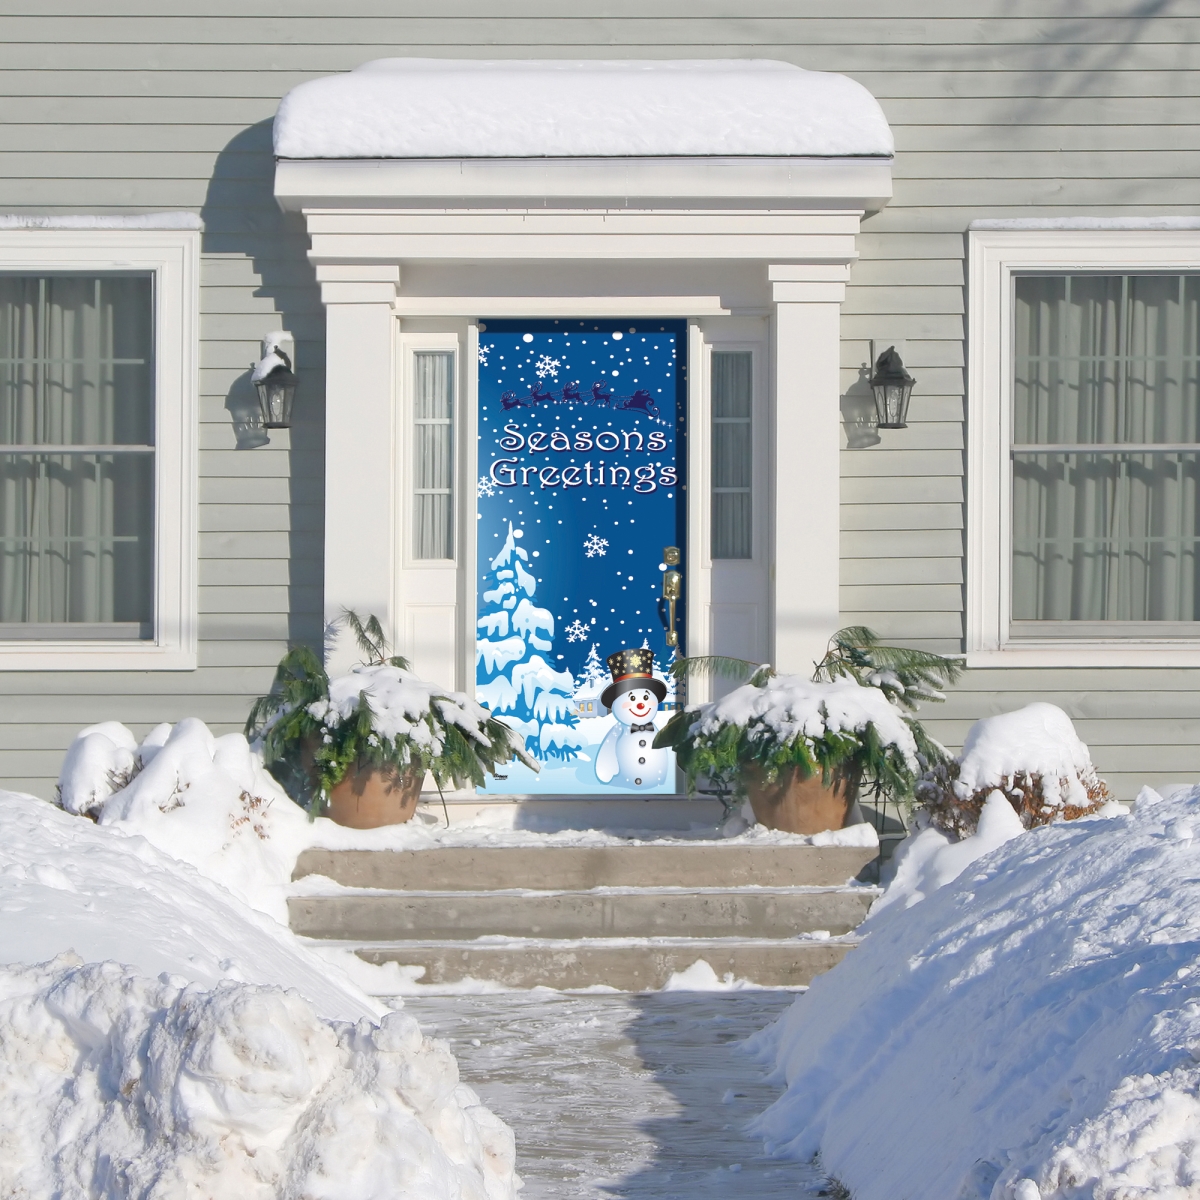 285906xmas-005 36 X 80 In. Winter Wonderland Christmas Front Door Mural Sign Banner Decor, Multi Color